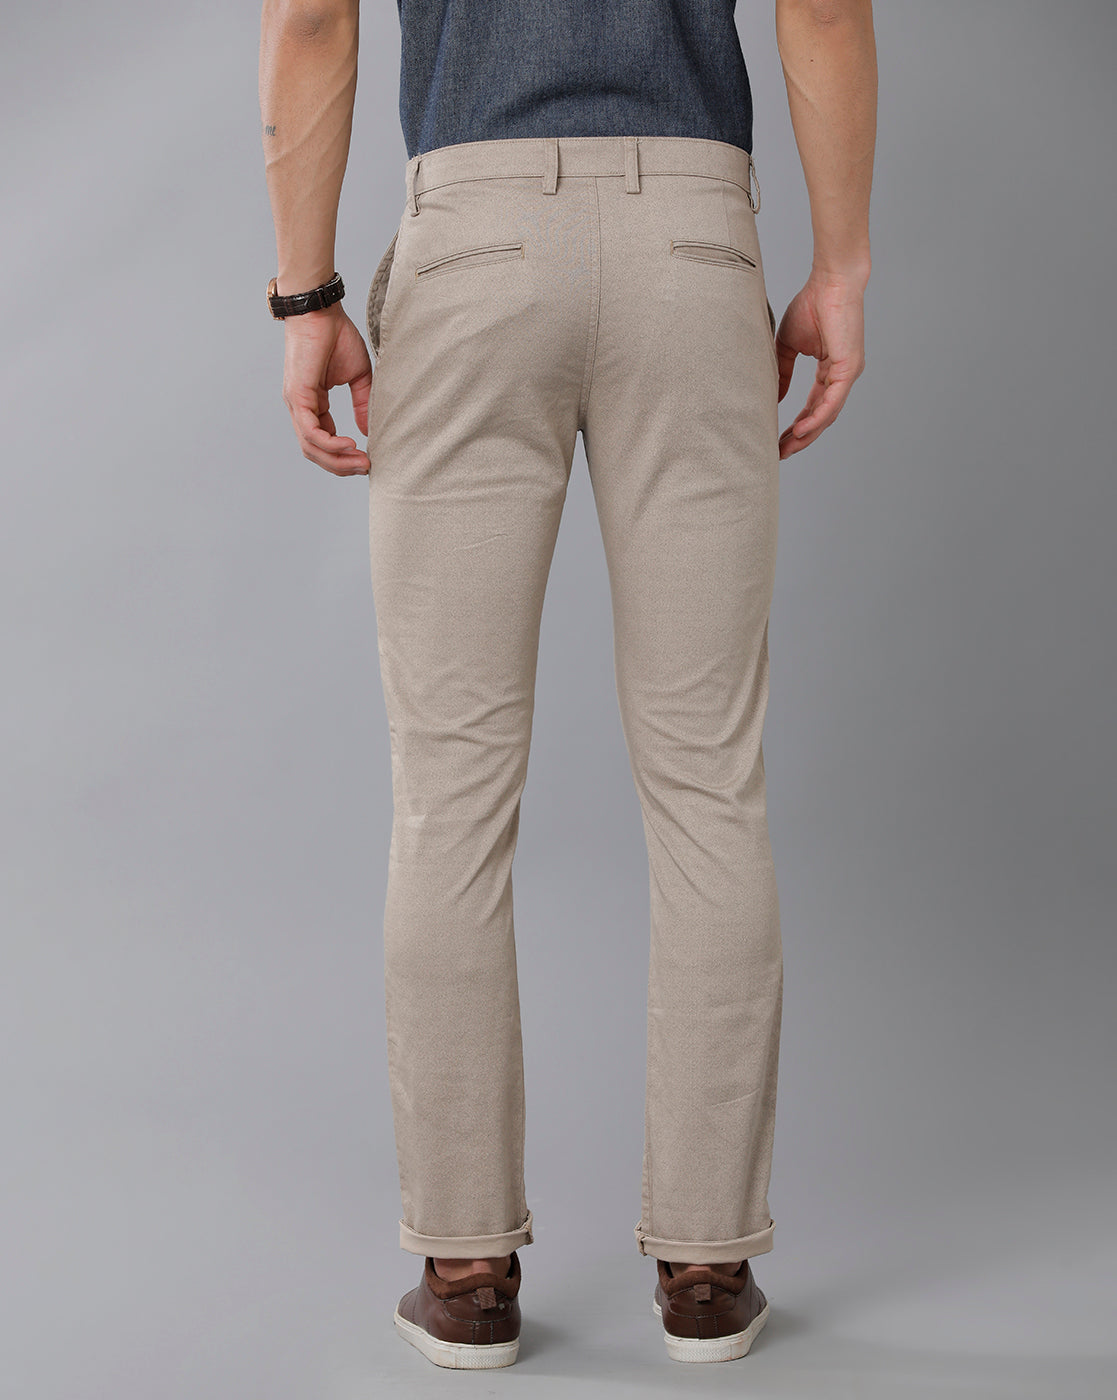 Classic Polo Men's 100% Cotton Moderate Fit Solid Cream Color Trouser